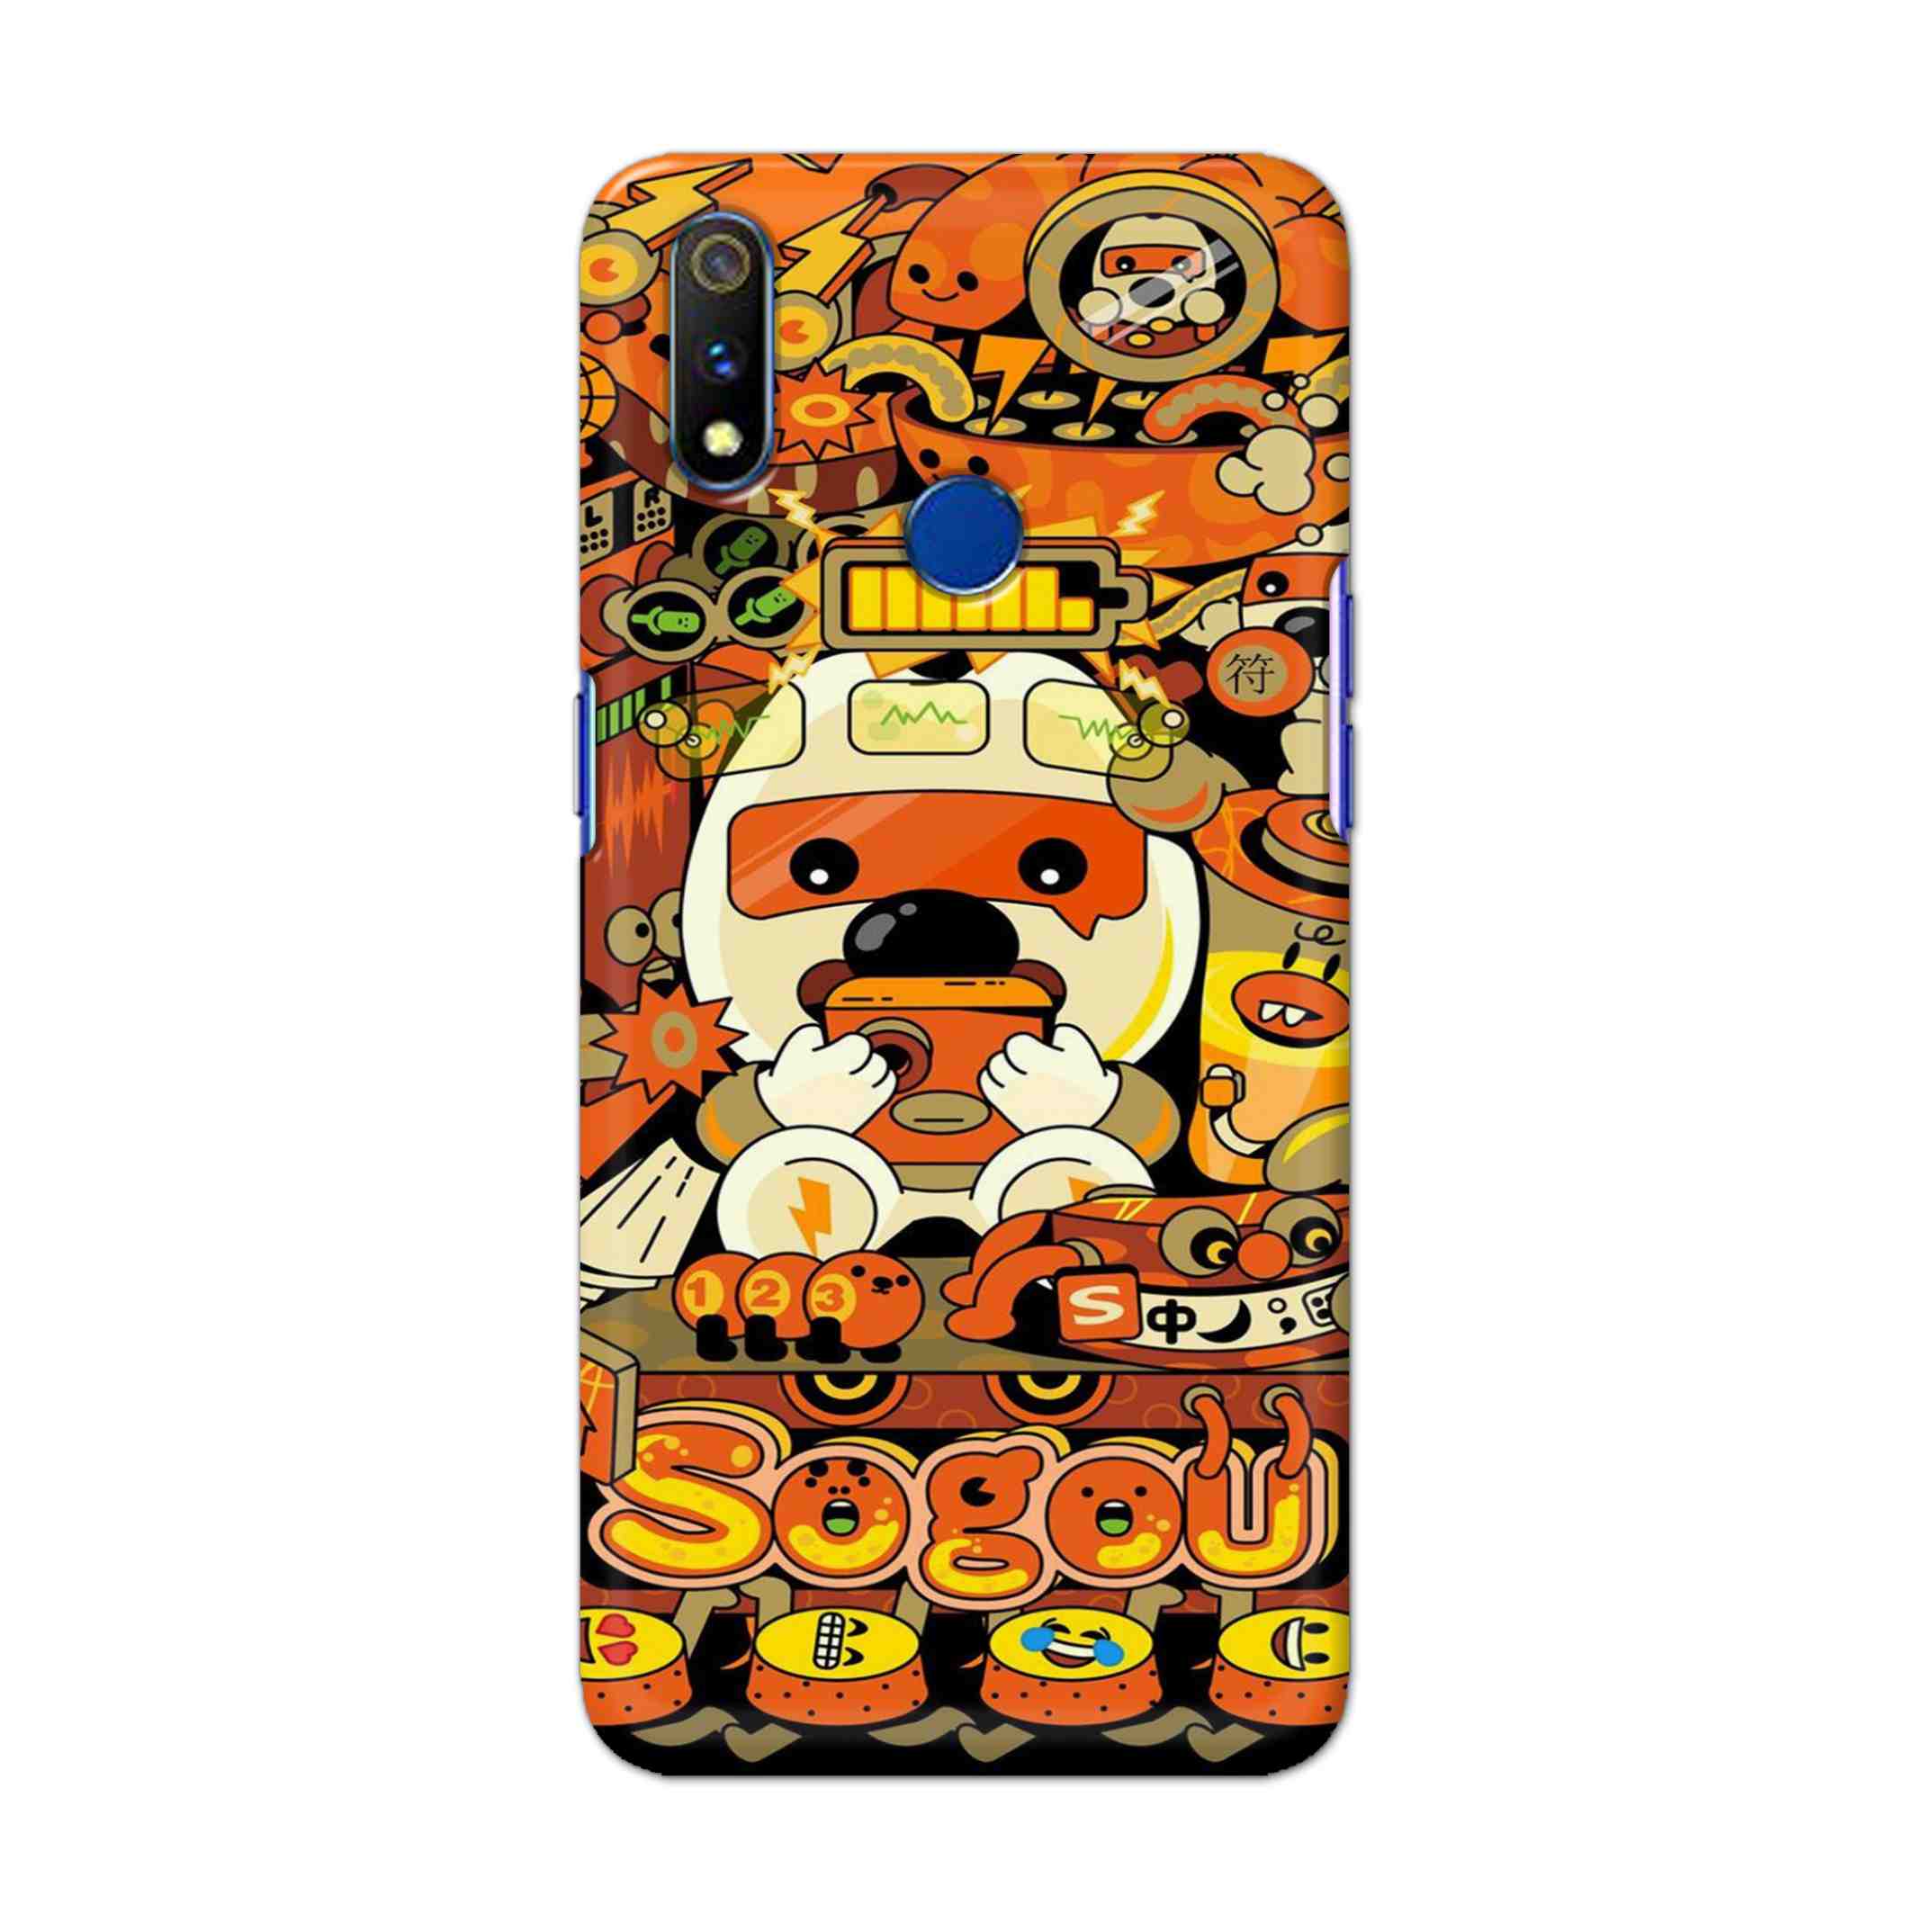 Buy Sogou Hard Back Mobile Phone Case Cover For Realme 3 Pro Online